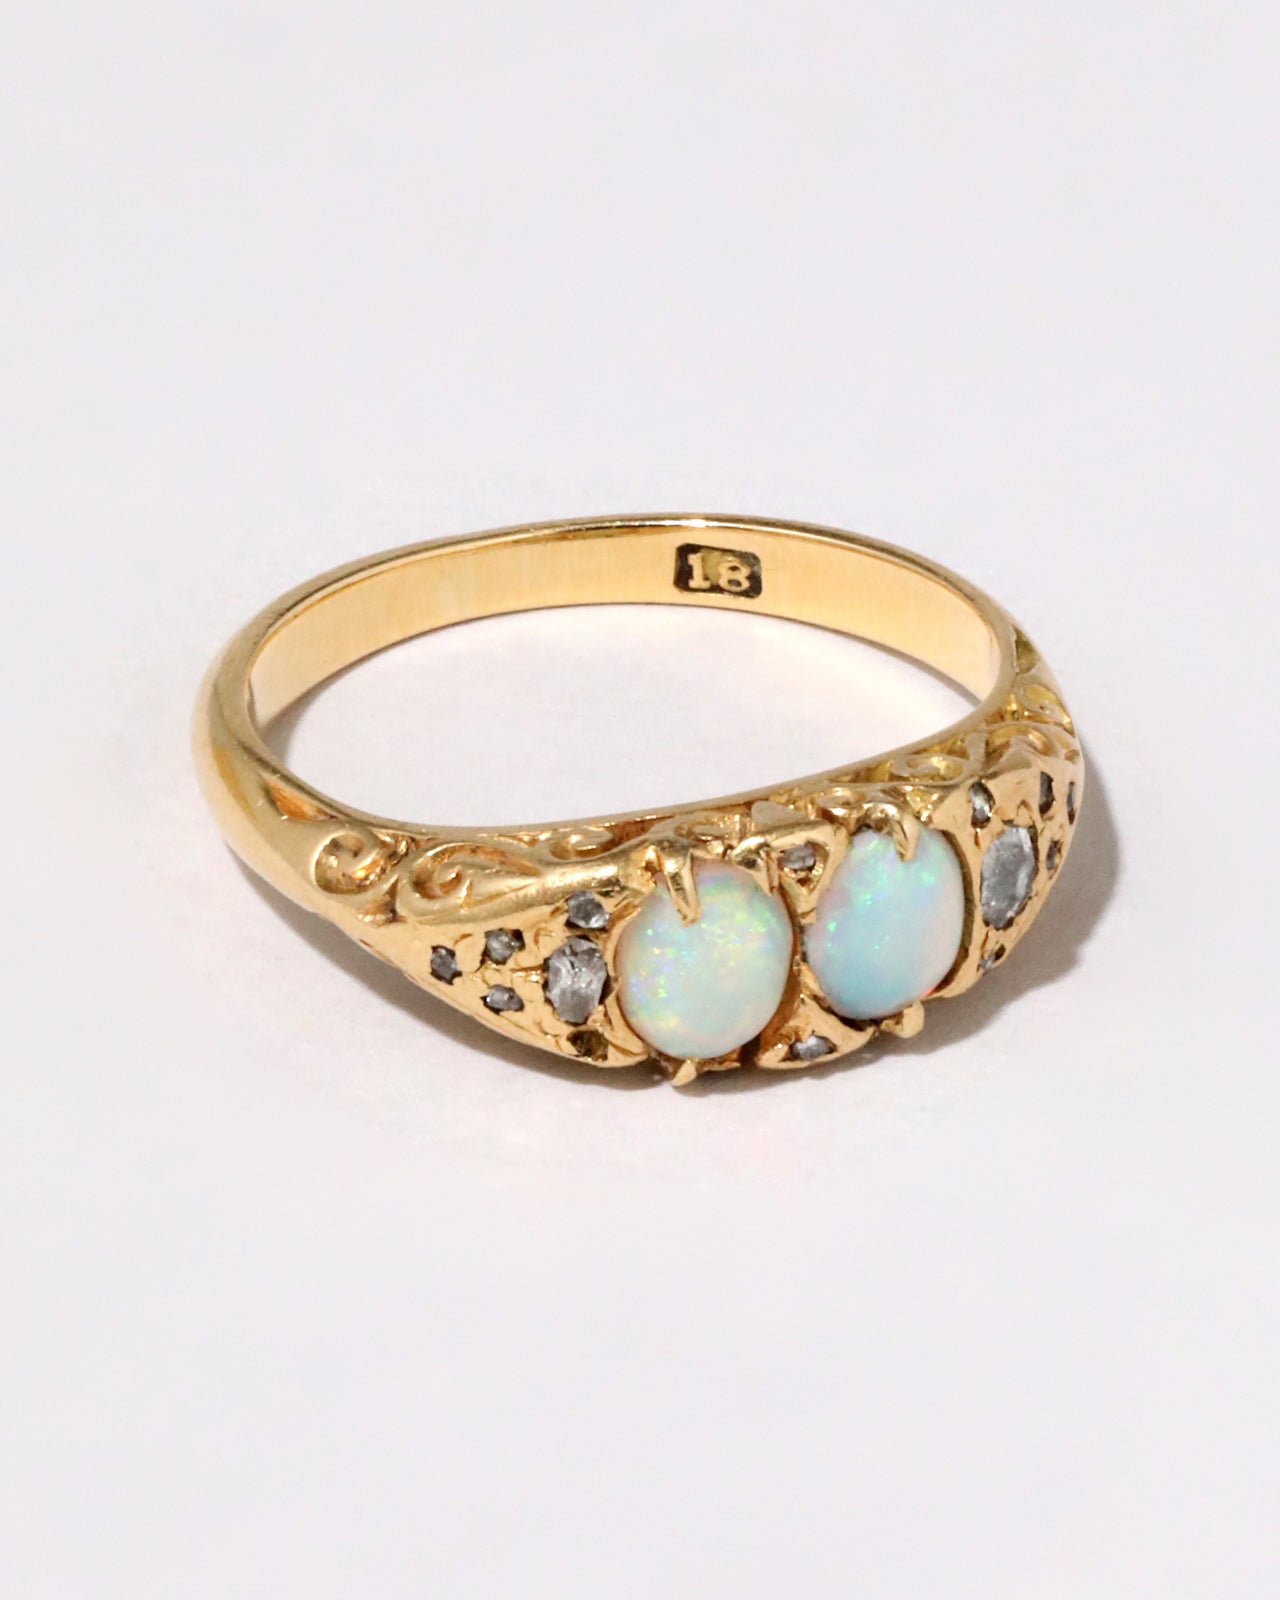 Antique 1880s 18k Gold Opal & Diamond Ring - Photo 2